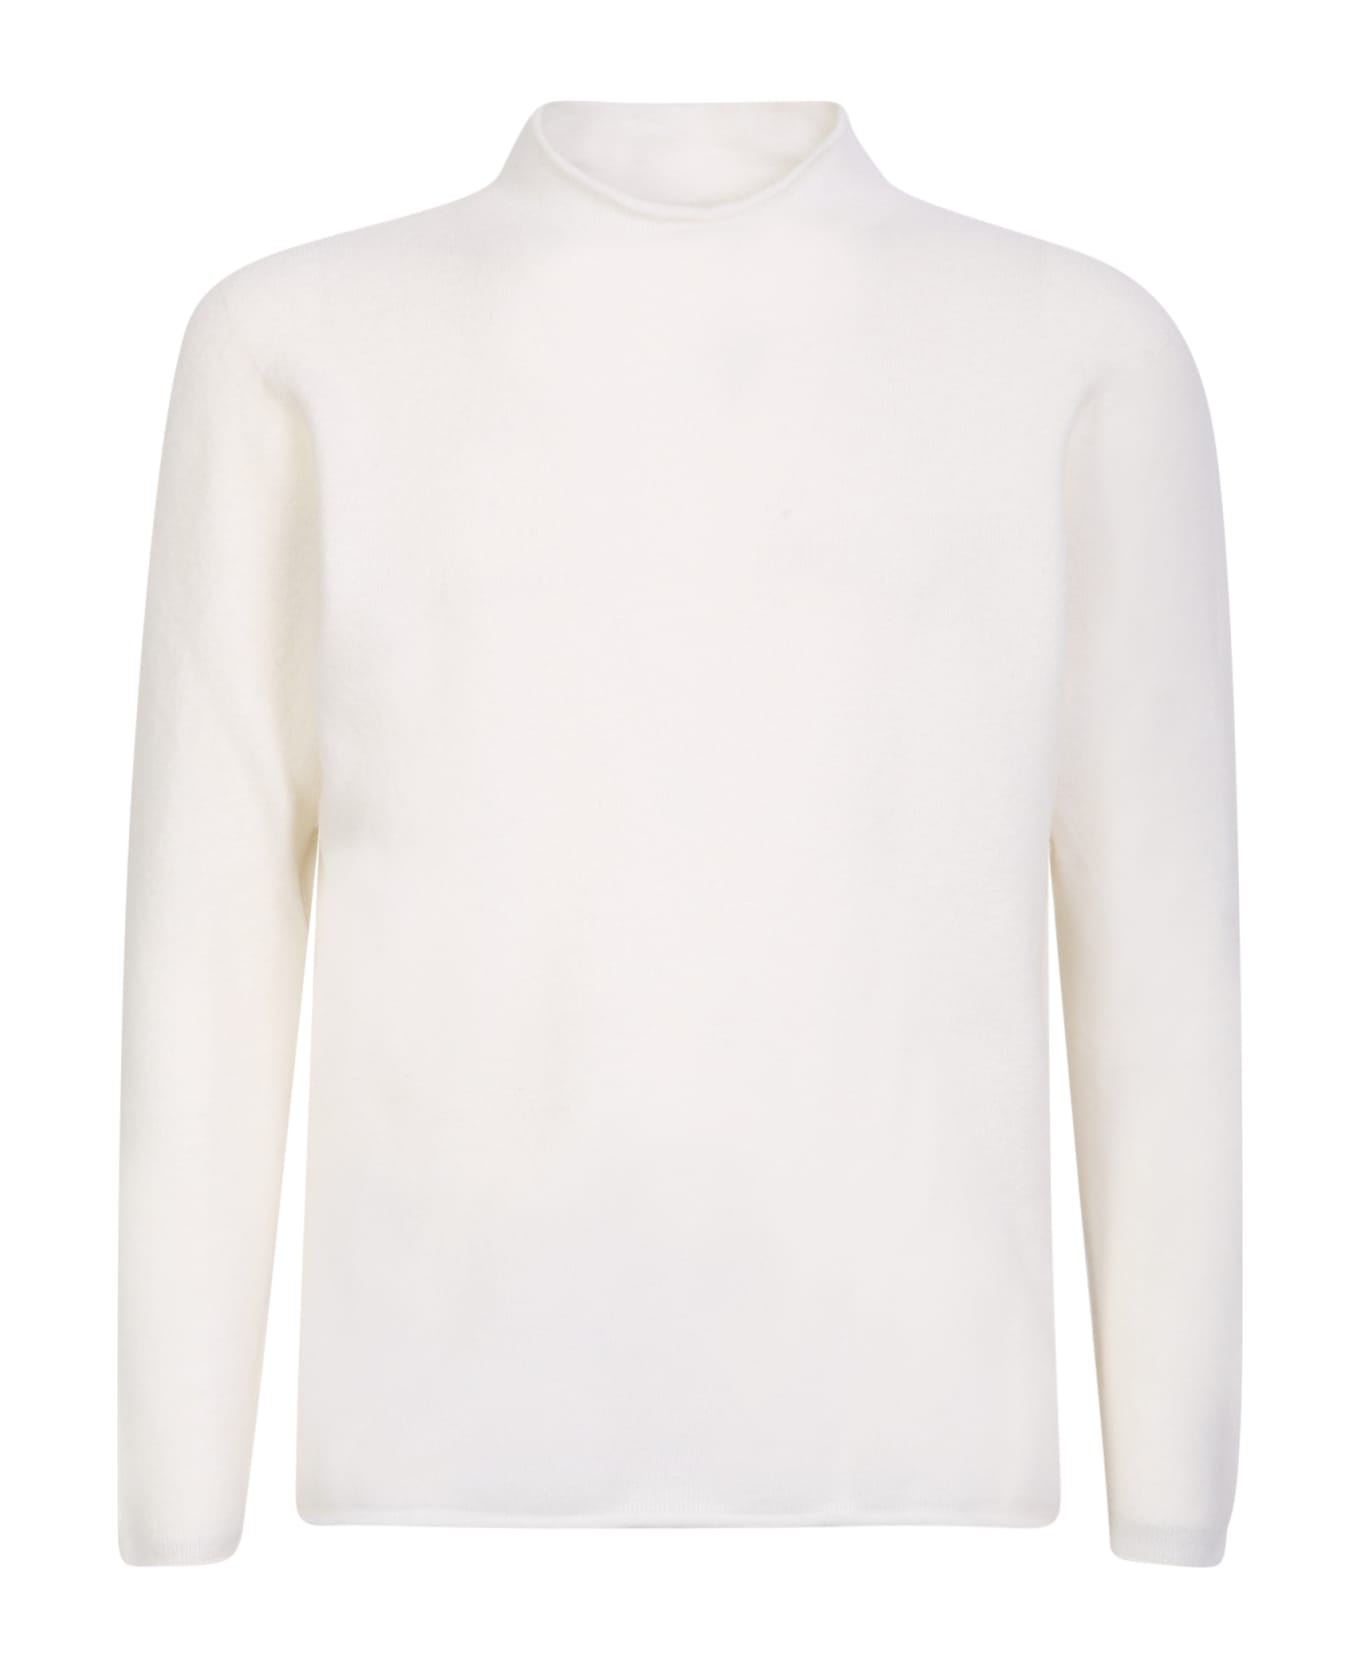 Original Vintage Style Original Vintage High-neck White Sweater - White